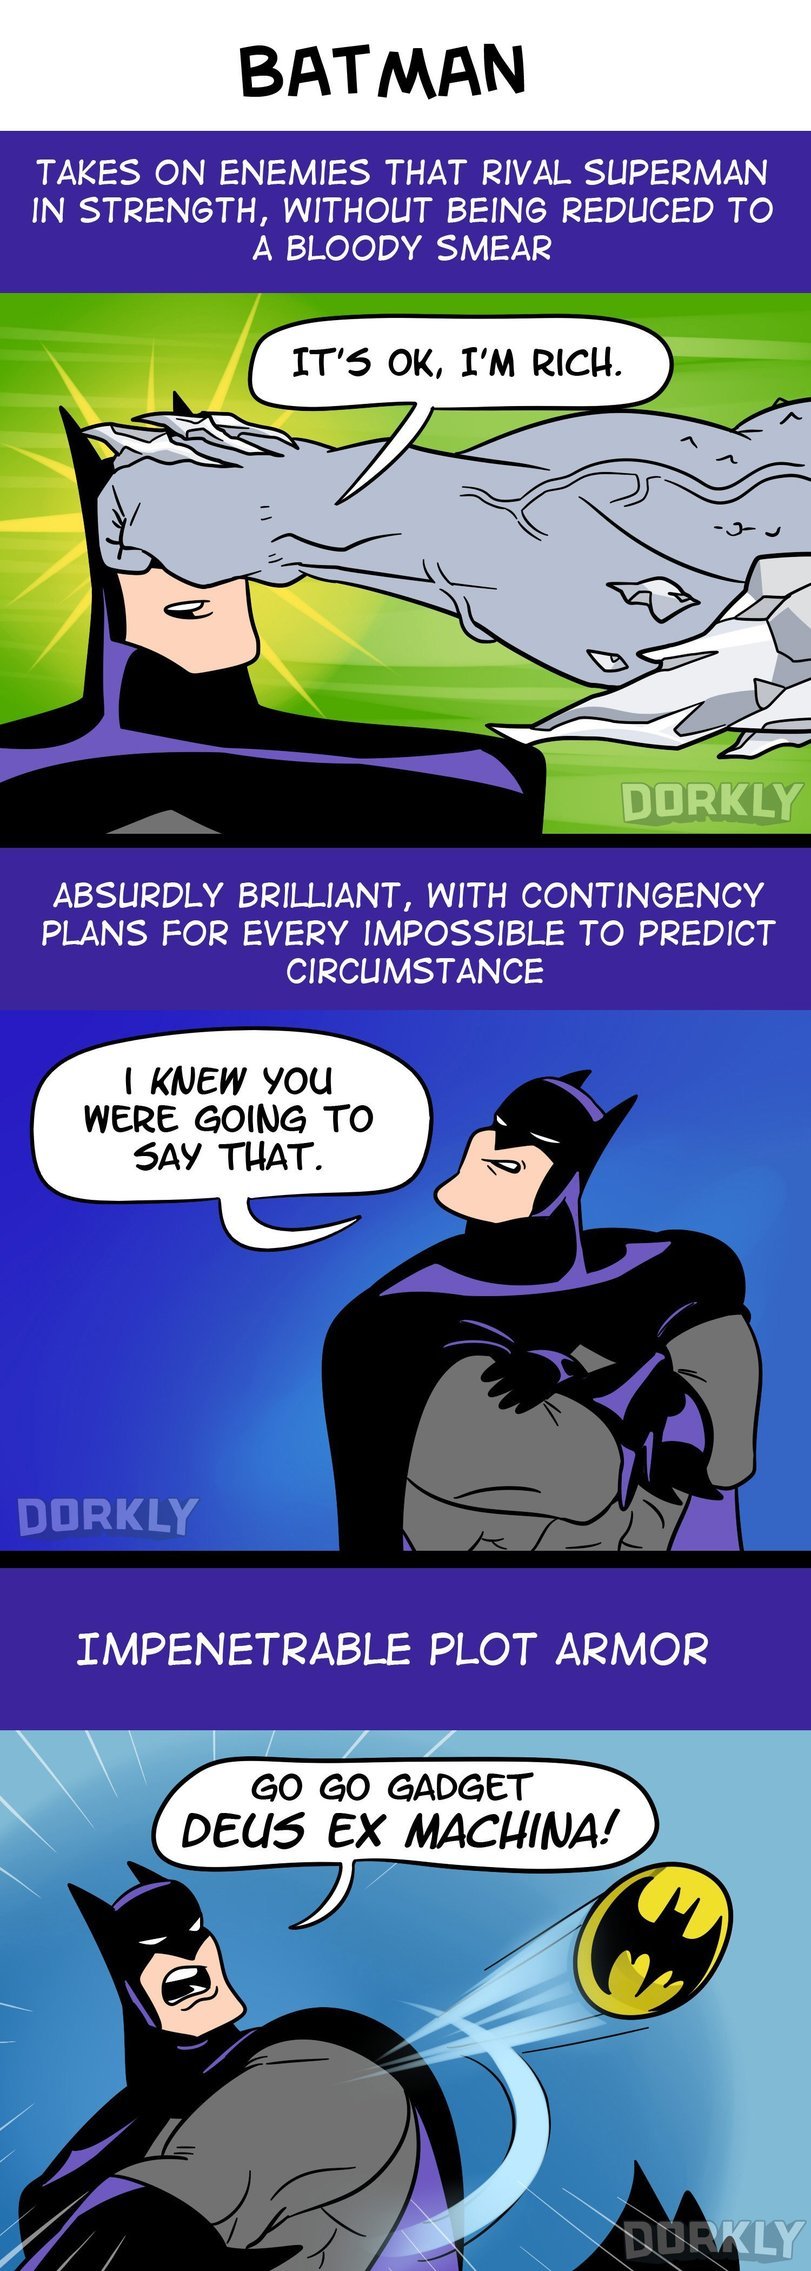 Batman strength